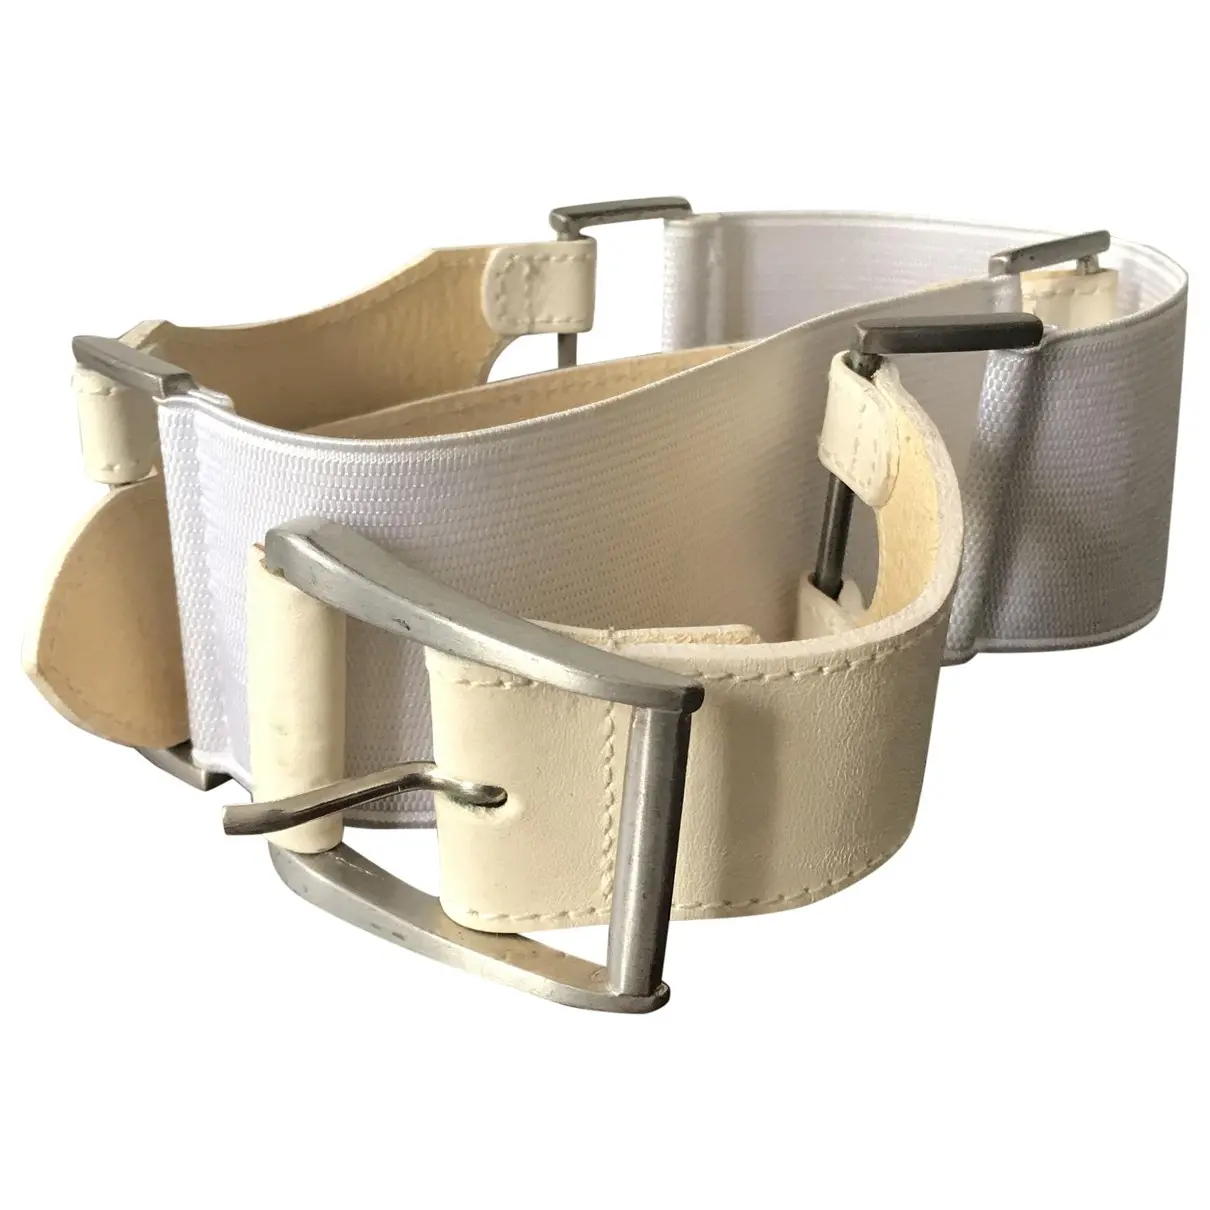 Schumacher Leather belt for sale